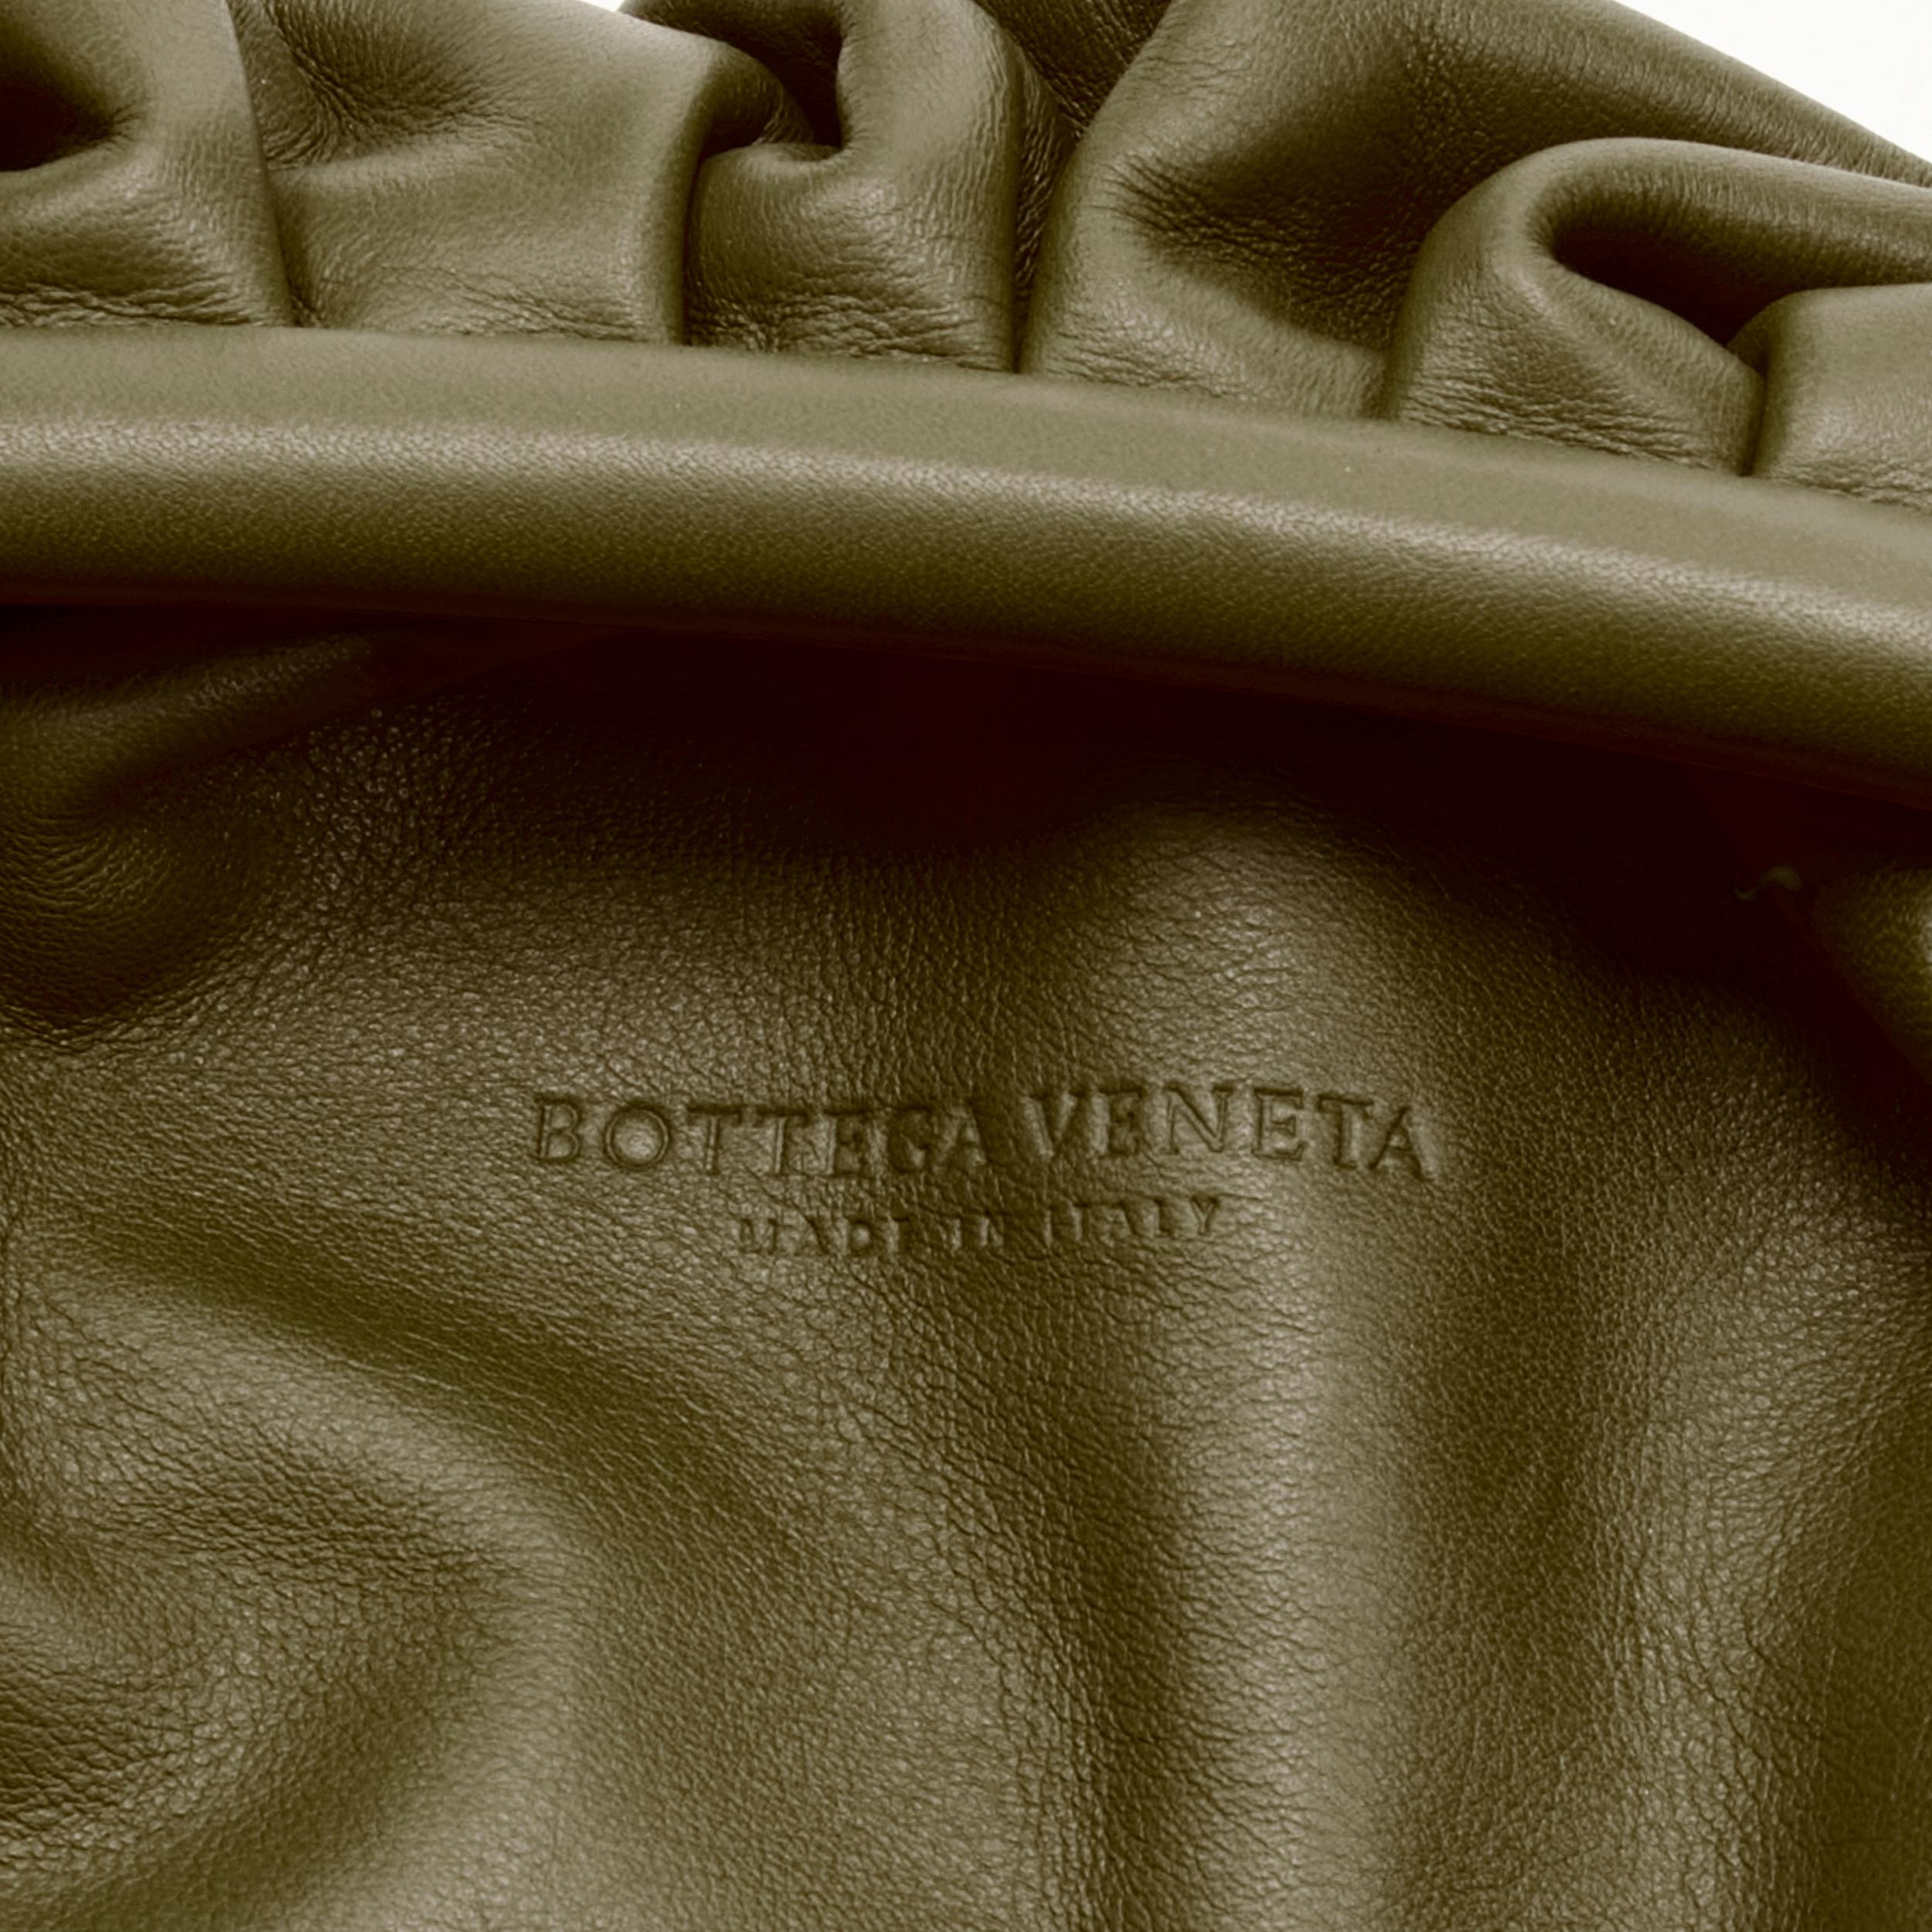 BOTTEGA VENETA The Pouch Large Olive green leather gathered dumpling clutch bag 3